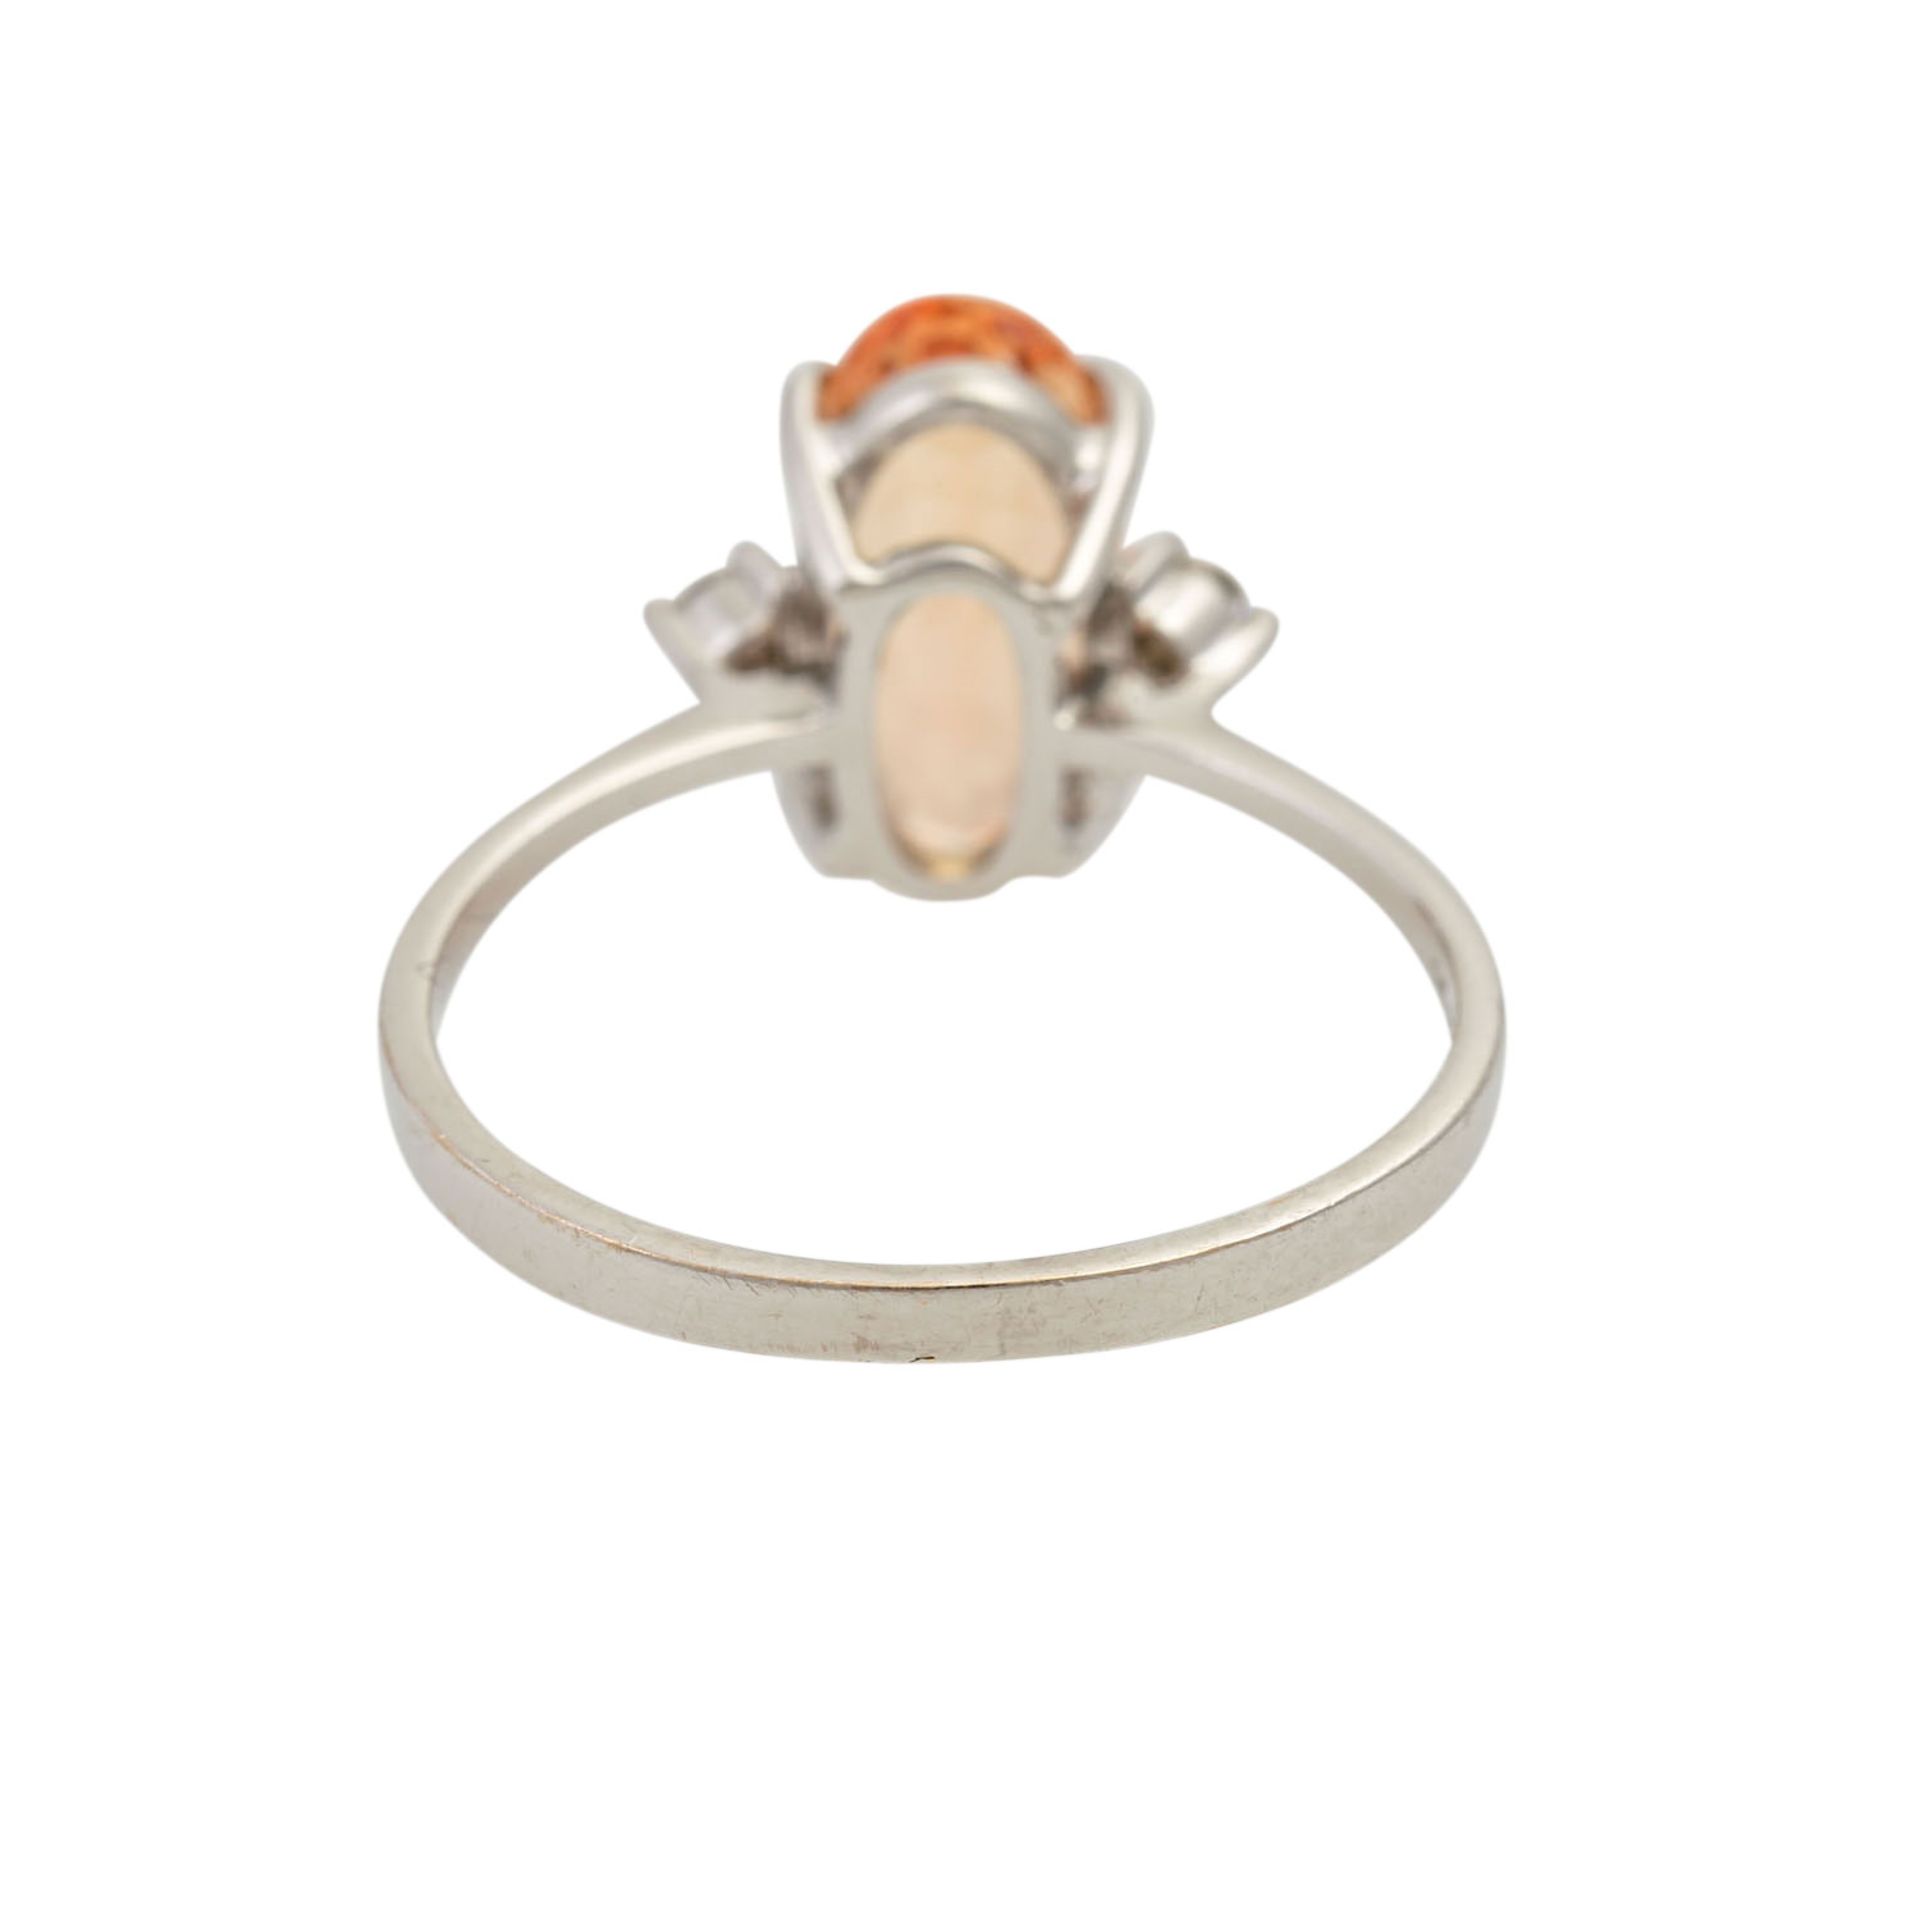 Ring mit apricotfarbenem Topas und 2 Achtkantdiamanten, Topas oval facettiert, WG 18K, - Image 4 of 4